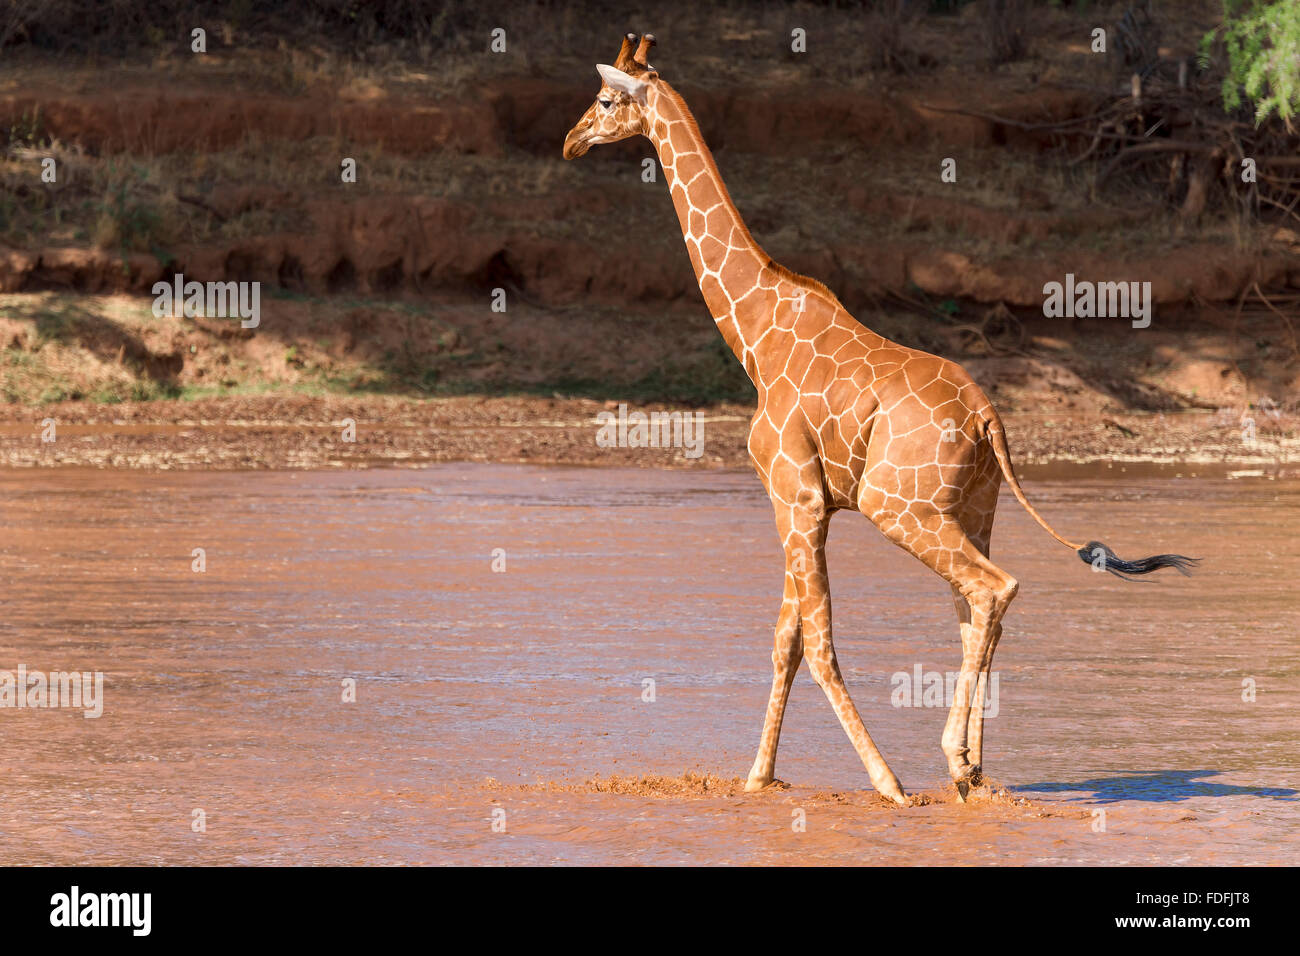 Jirafa reticulada (Giraffa camelopardalis reticulata) cruzando el río, Reserva Nacional de Samburu, Kenia Foto de stock